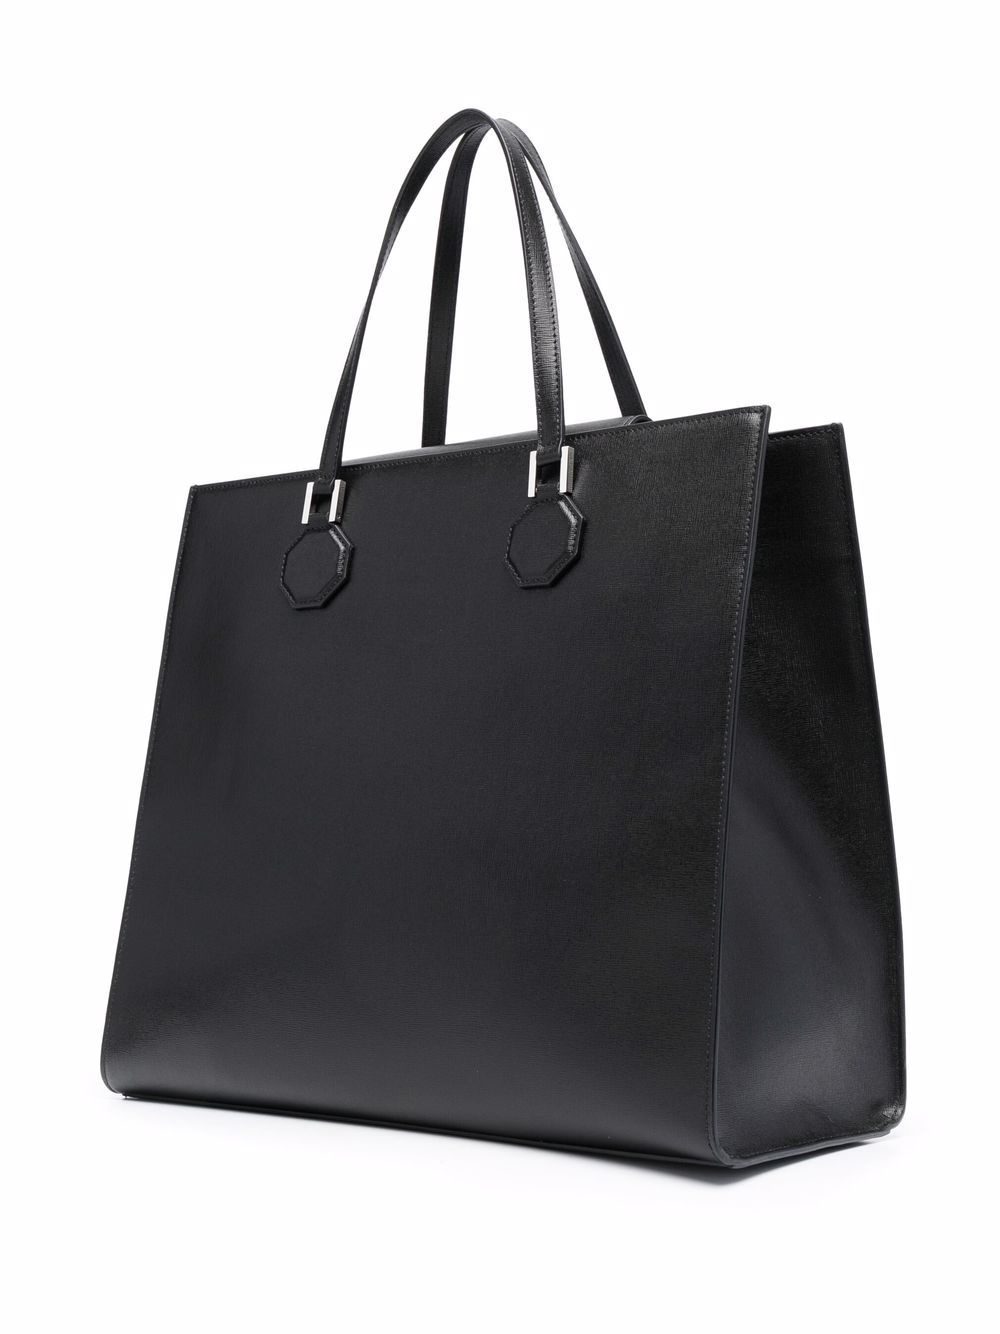 TM leather tote bag - 4